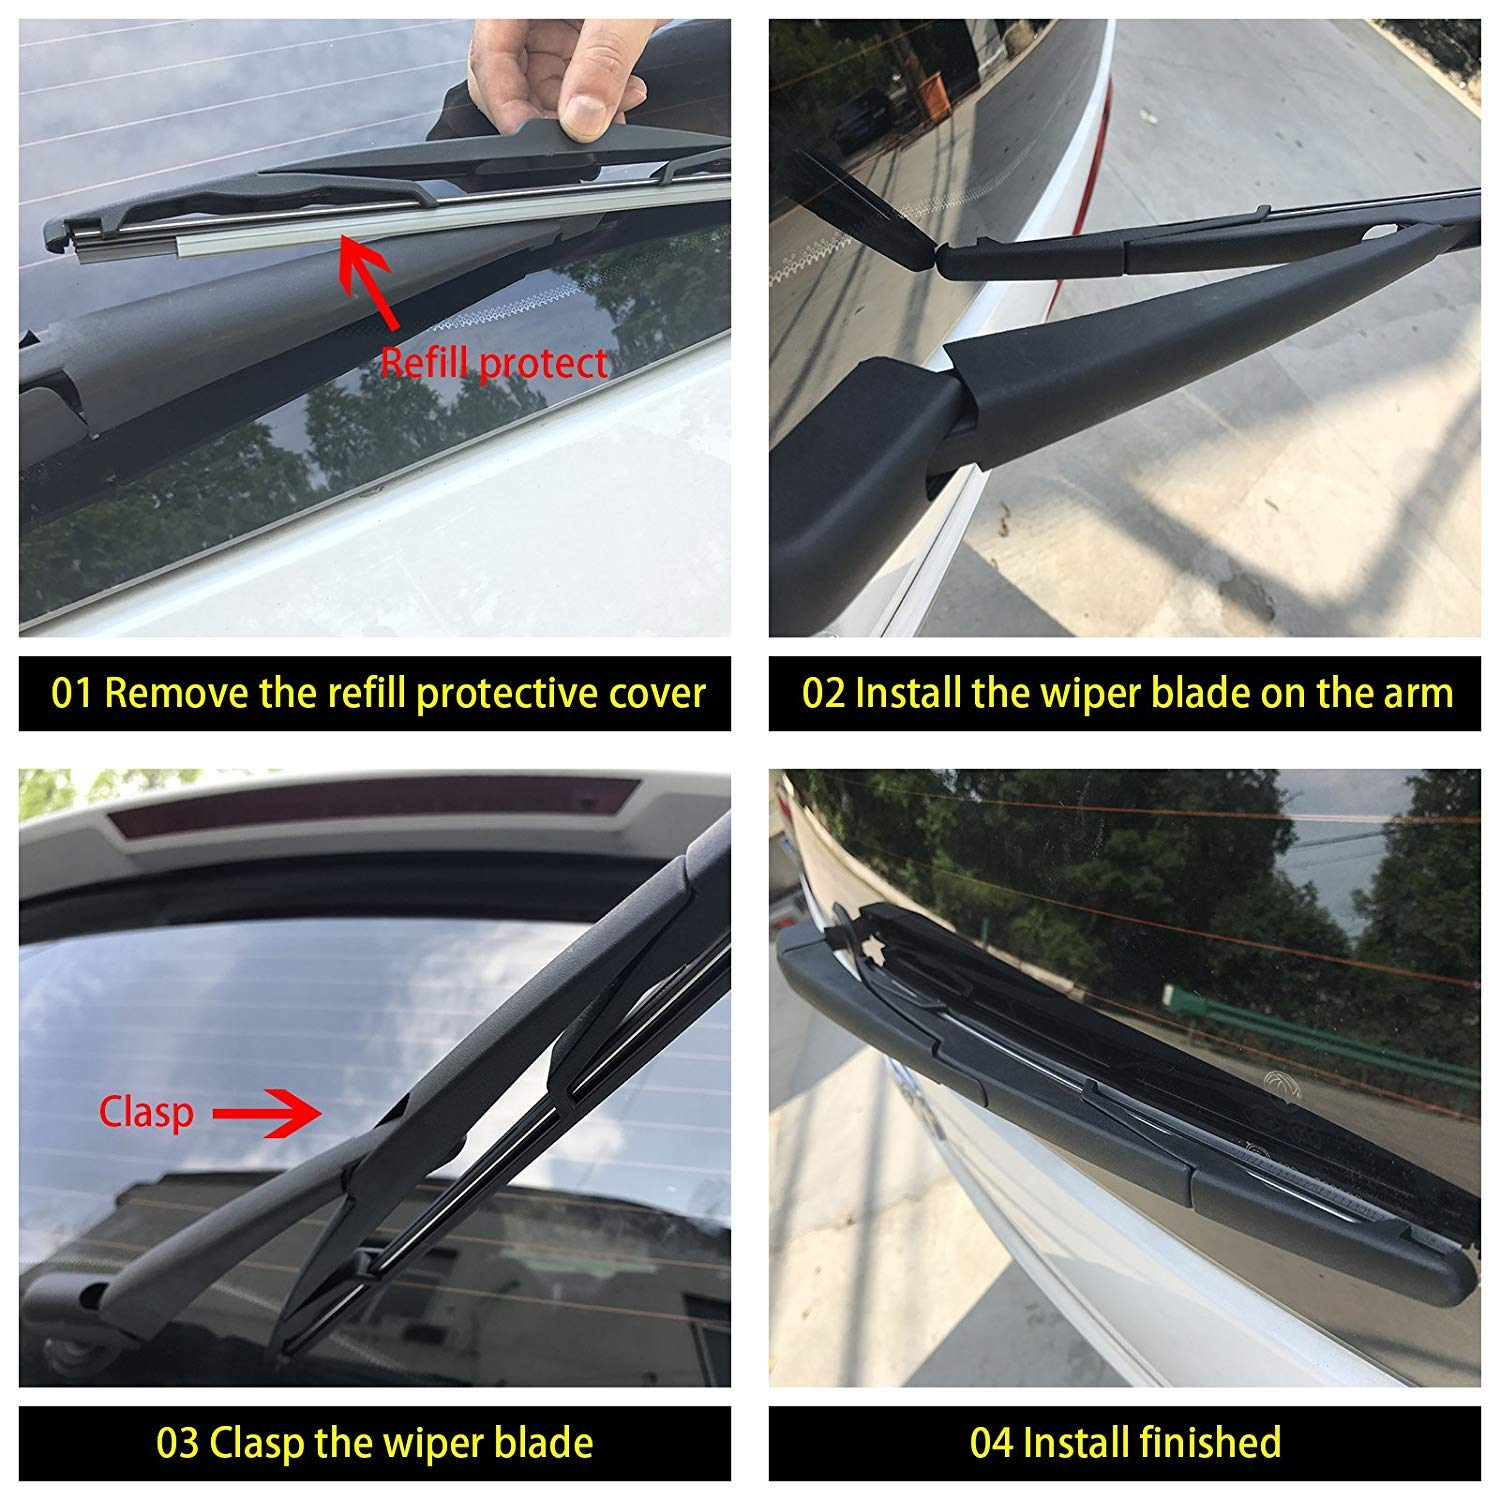 OTUAYAUTO Rear Windshield Wiper Blades - 2 Pieces of 16" Car Back Window Wiper - Replacement for Honda Odyssey 2005-2018, Subaru Impreza 2004-2014, Subaru Forester 2004-2005